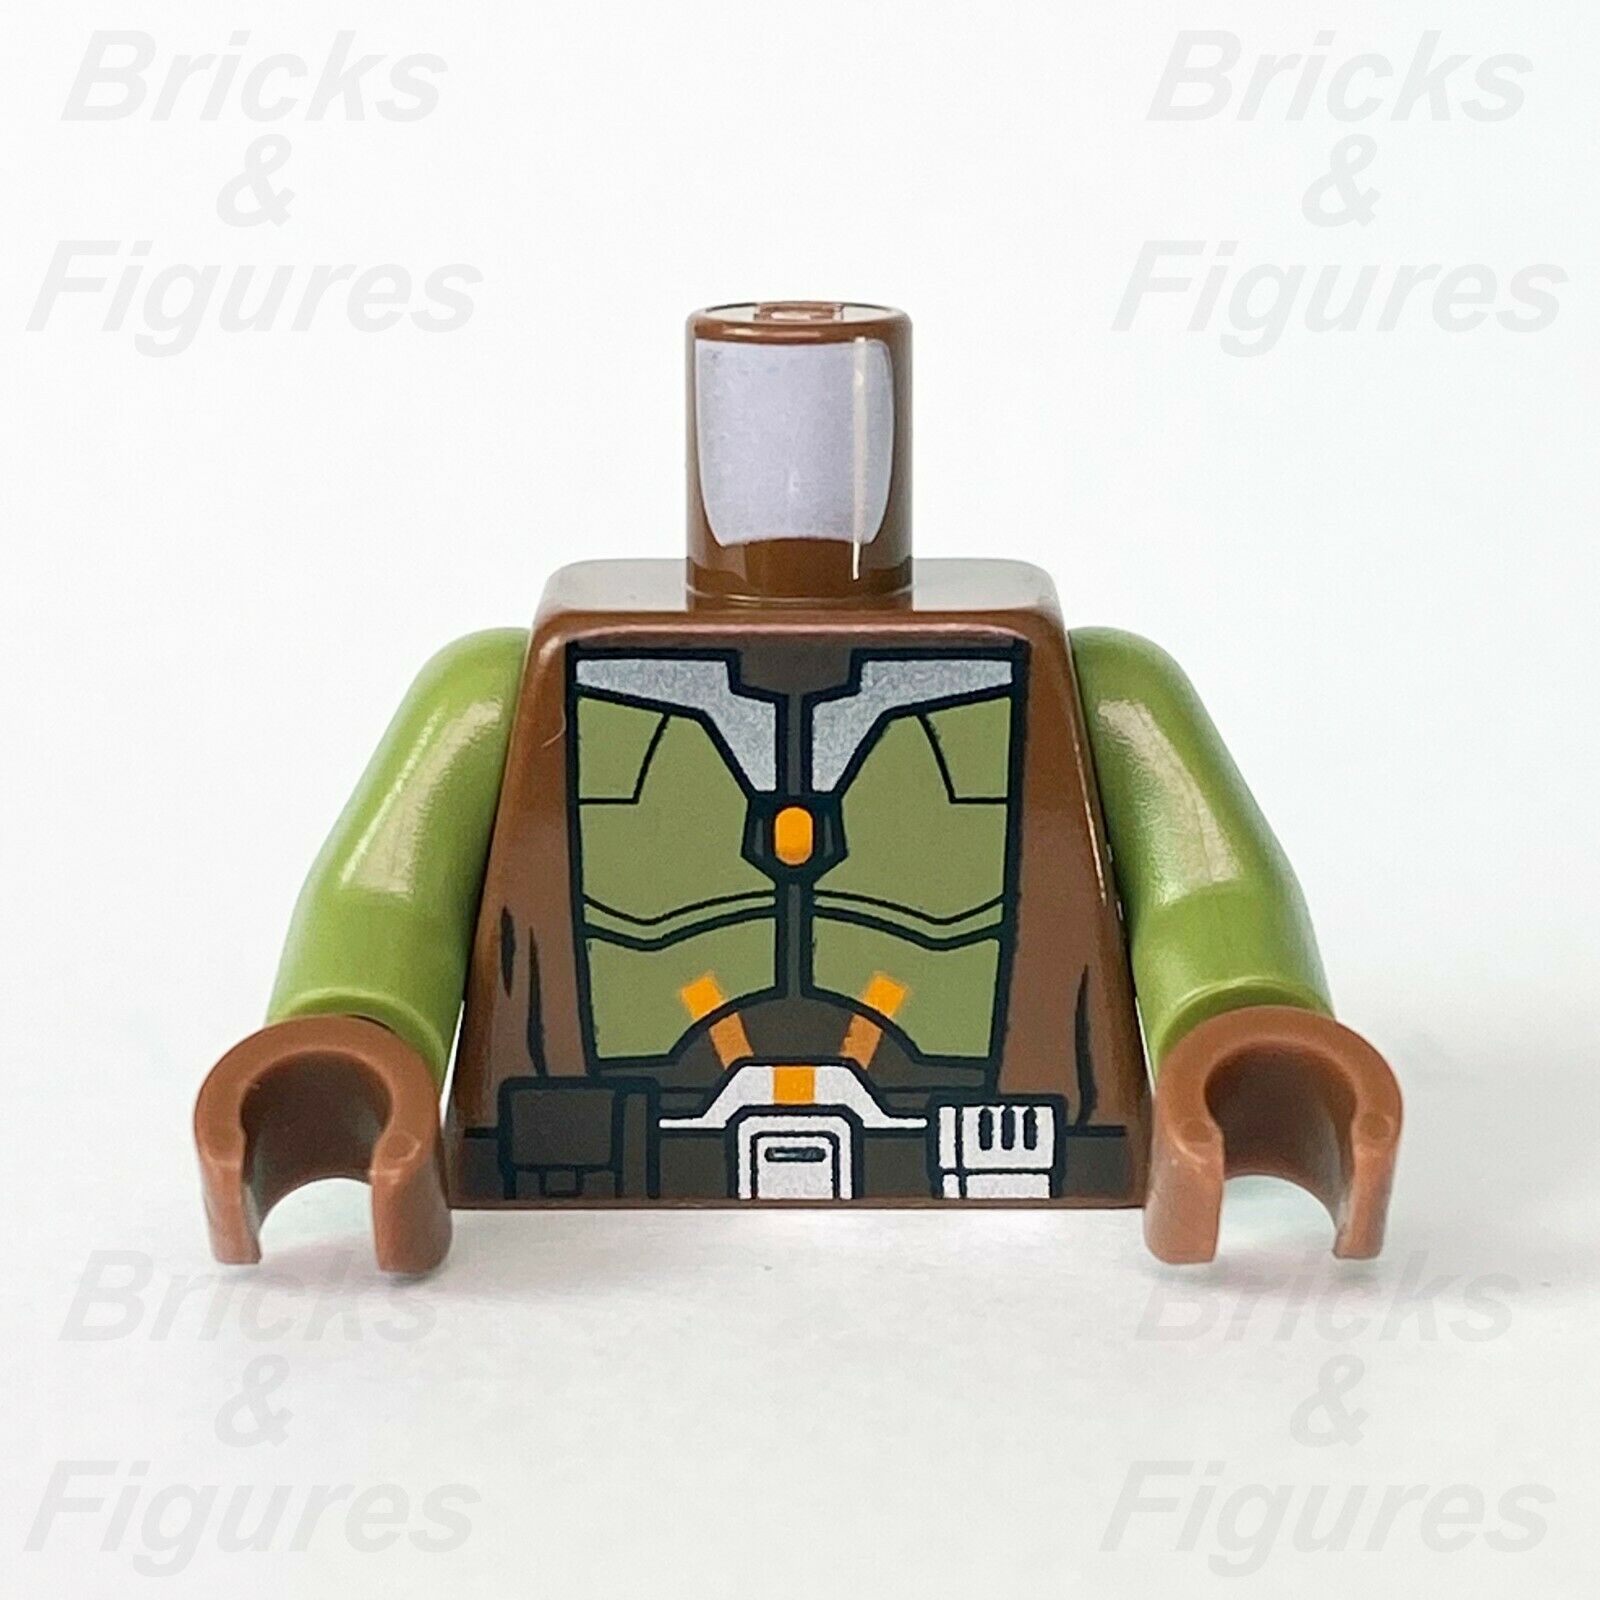 New Star Wars LEGO Jedi Knight (Armor & Robe) Body Torso Minifigure Part 75025 - Bricks & Figures